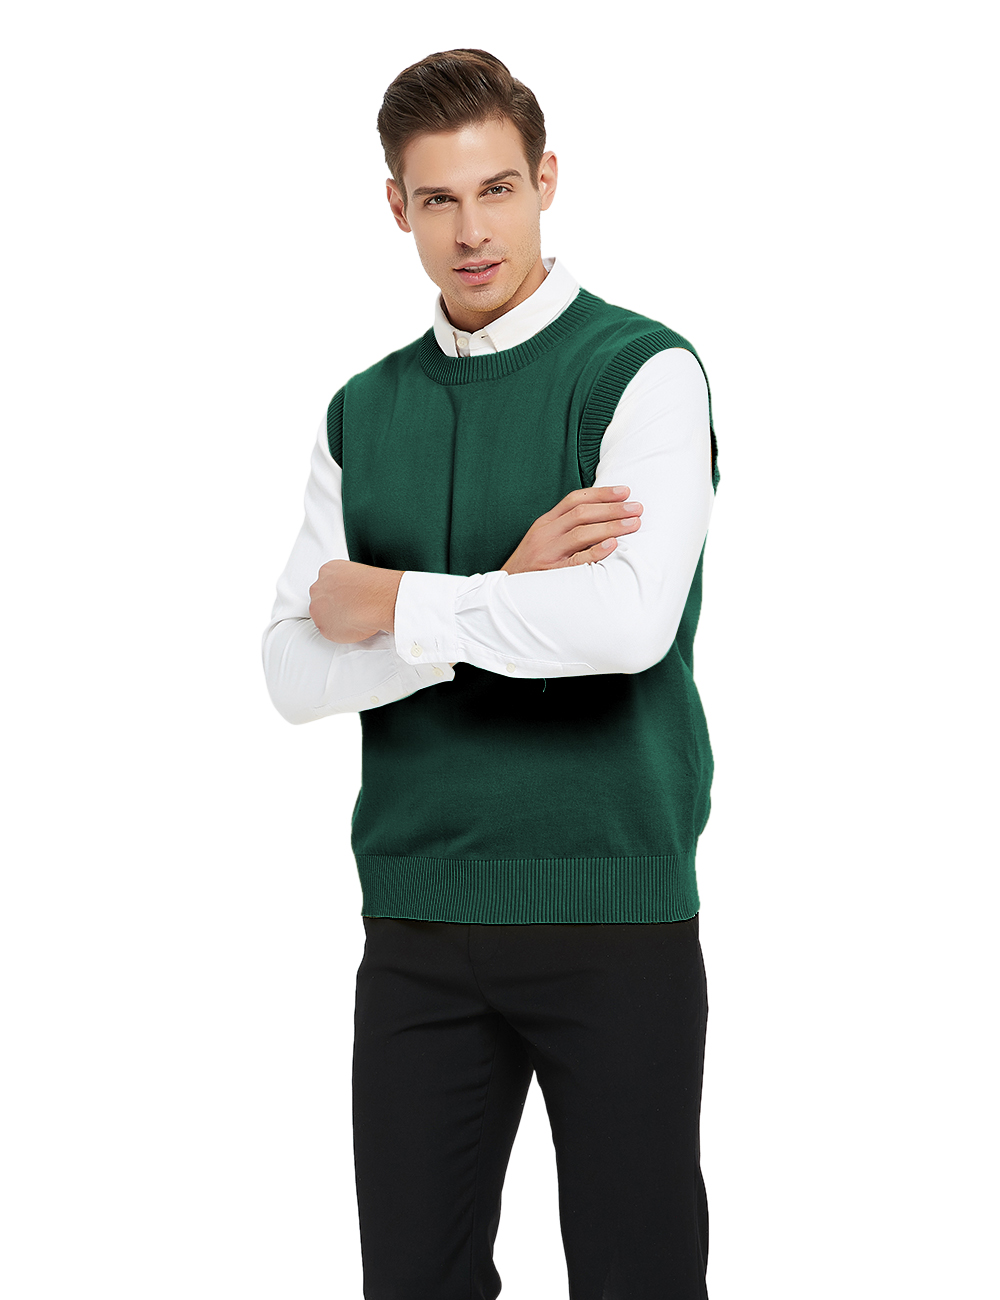 Toptie Men's Business Sweater Vest Cotton Jumper Top-Green-S - image 3 of 7